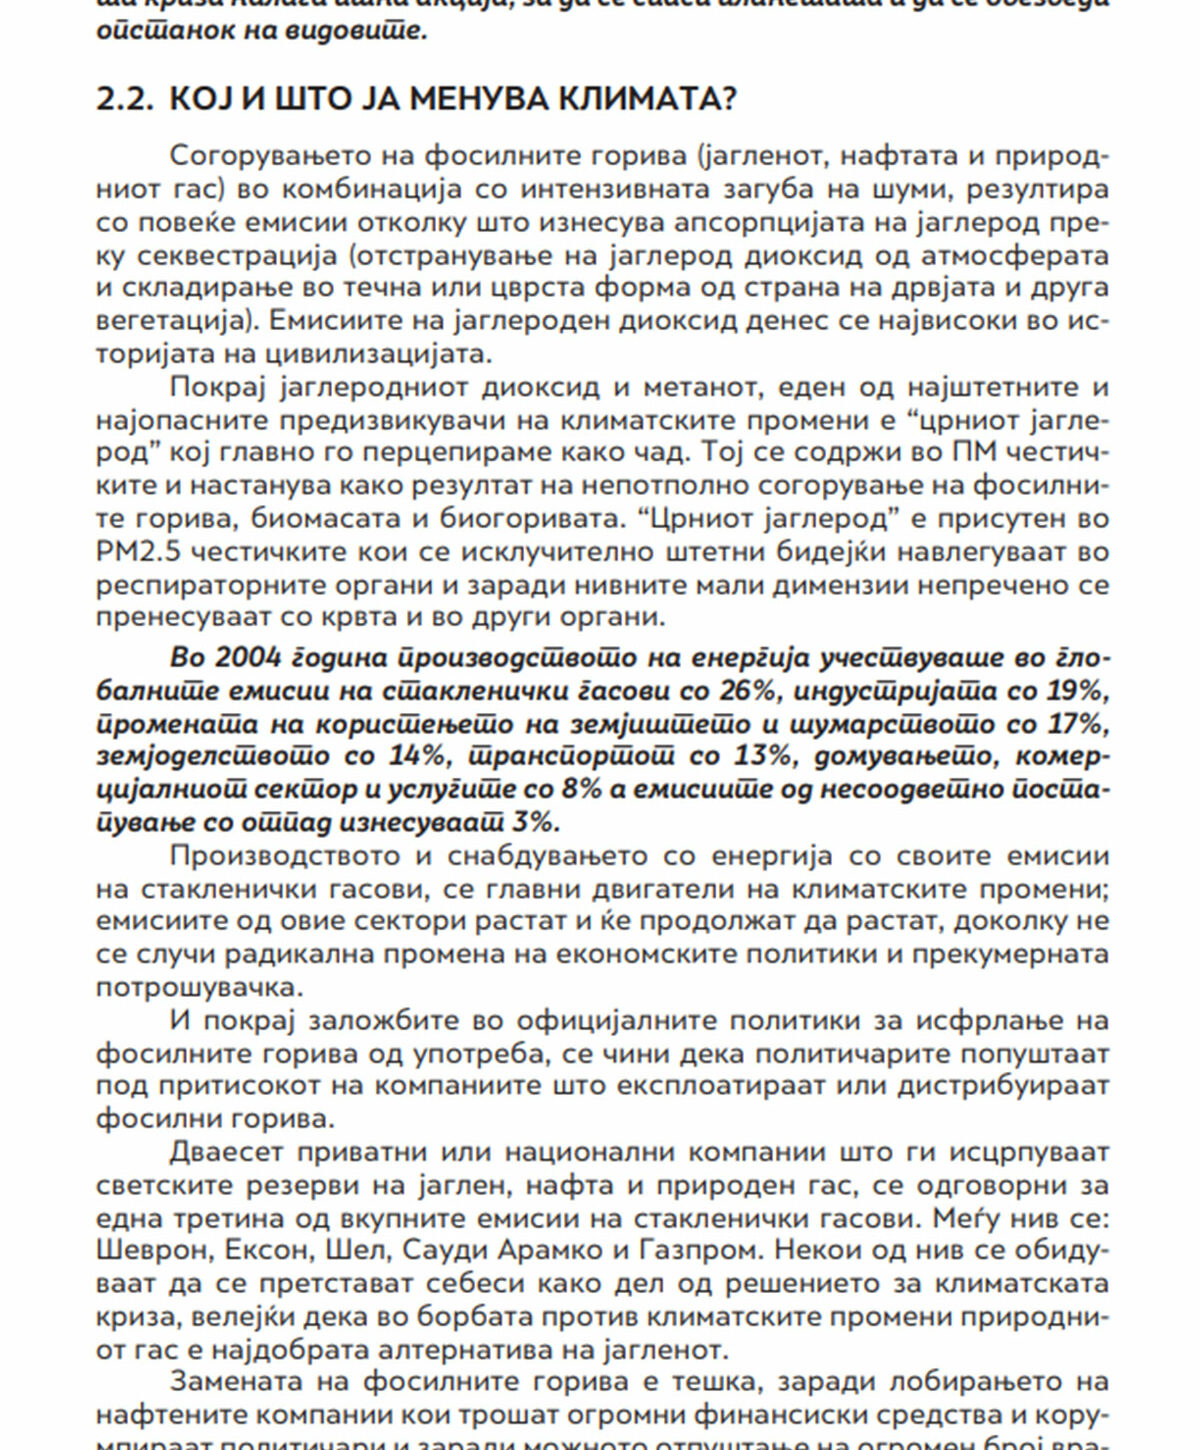 zelenata tranzicija dolg pat za makedonija so prazni vetuvanja i nenauceni lekcii 11